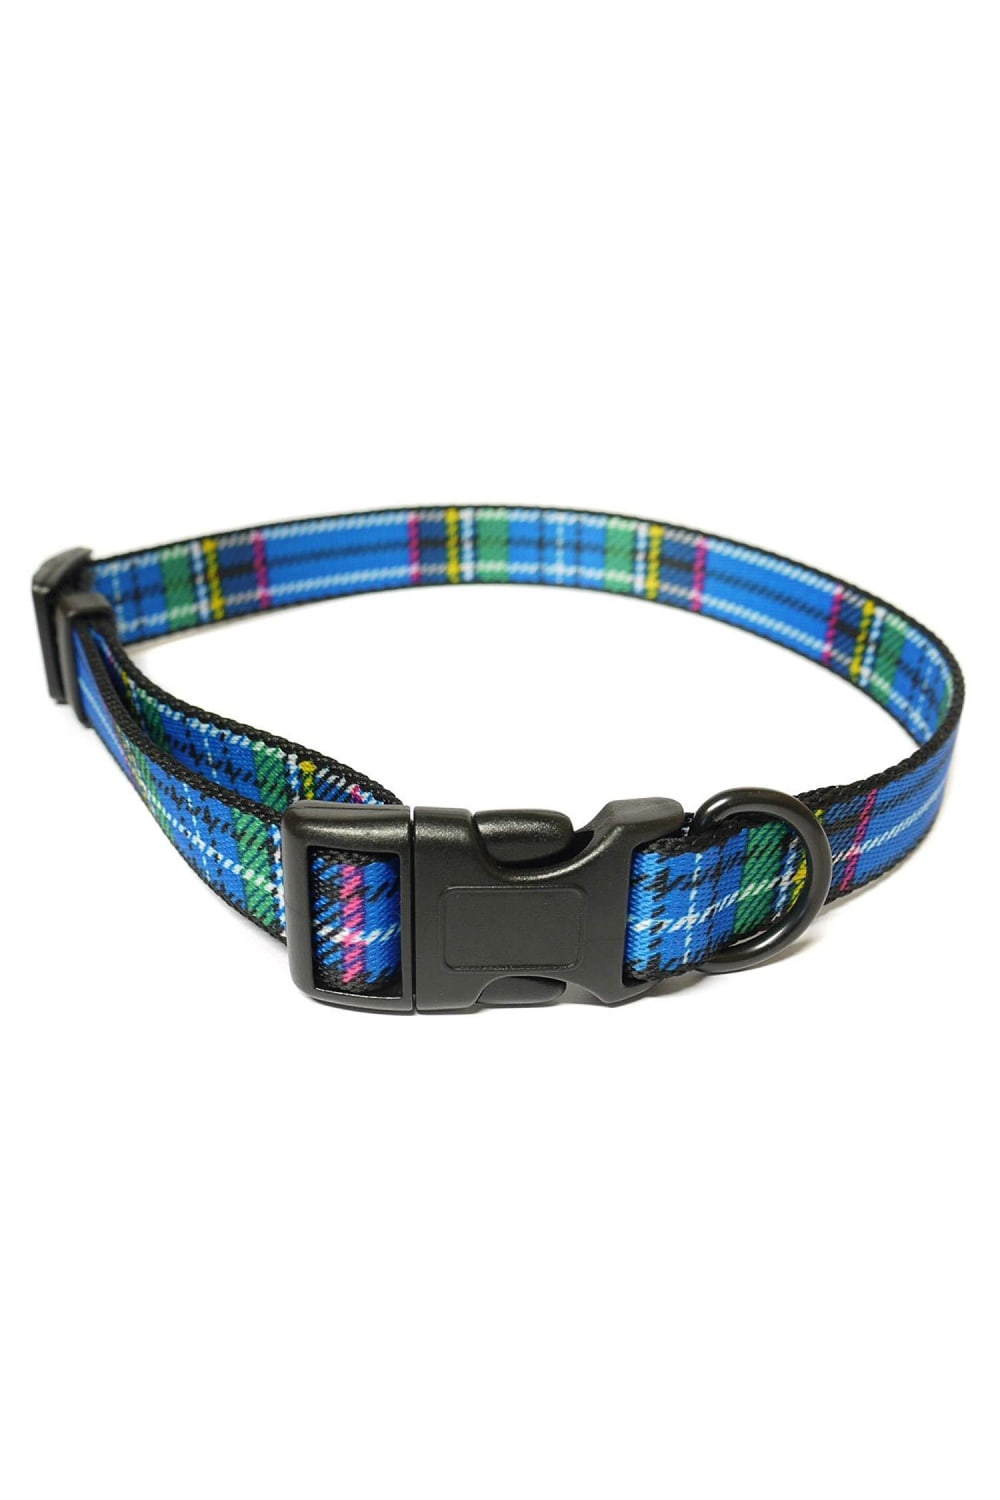 Ancol Tartan Adjustable Dog Collar (Blue Tartan) (18-27.5in)